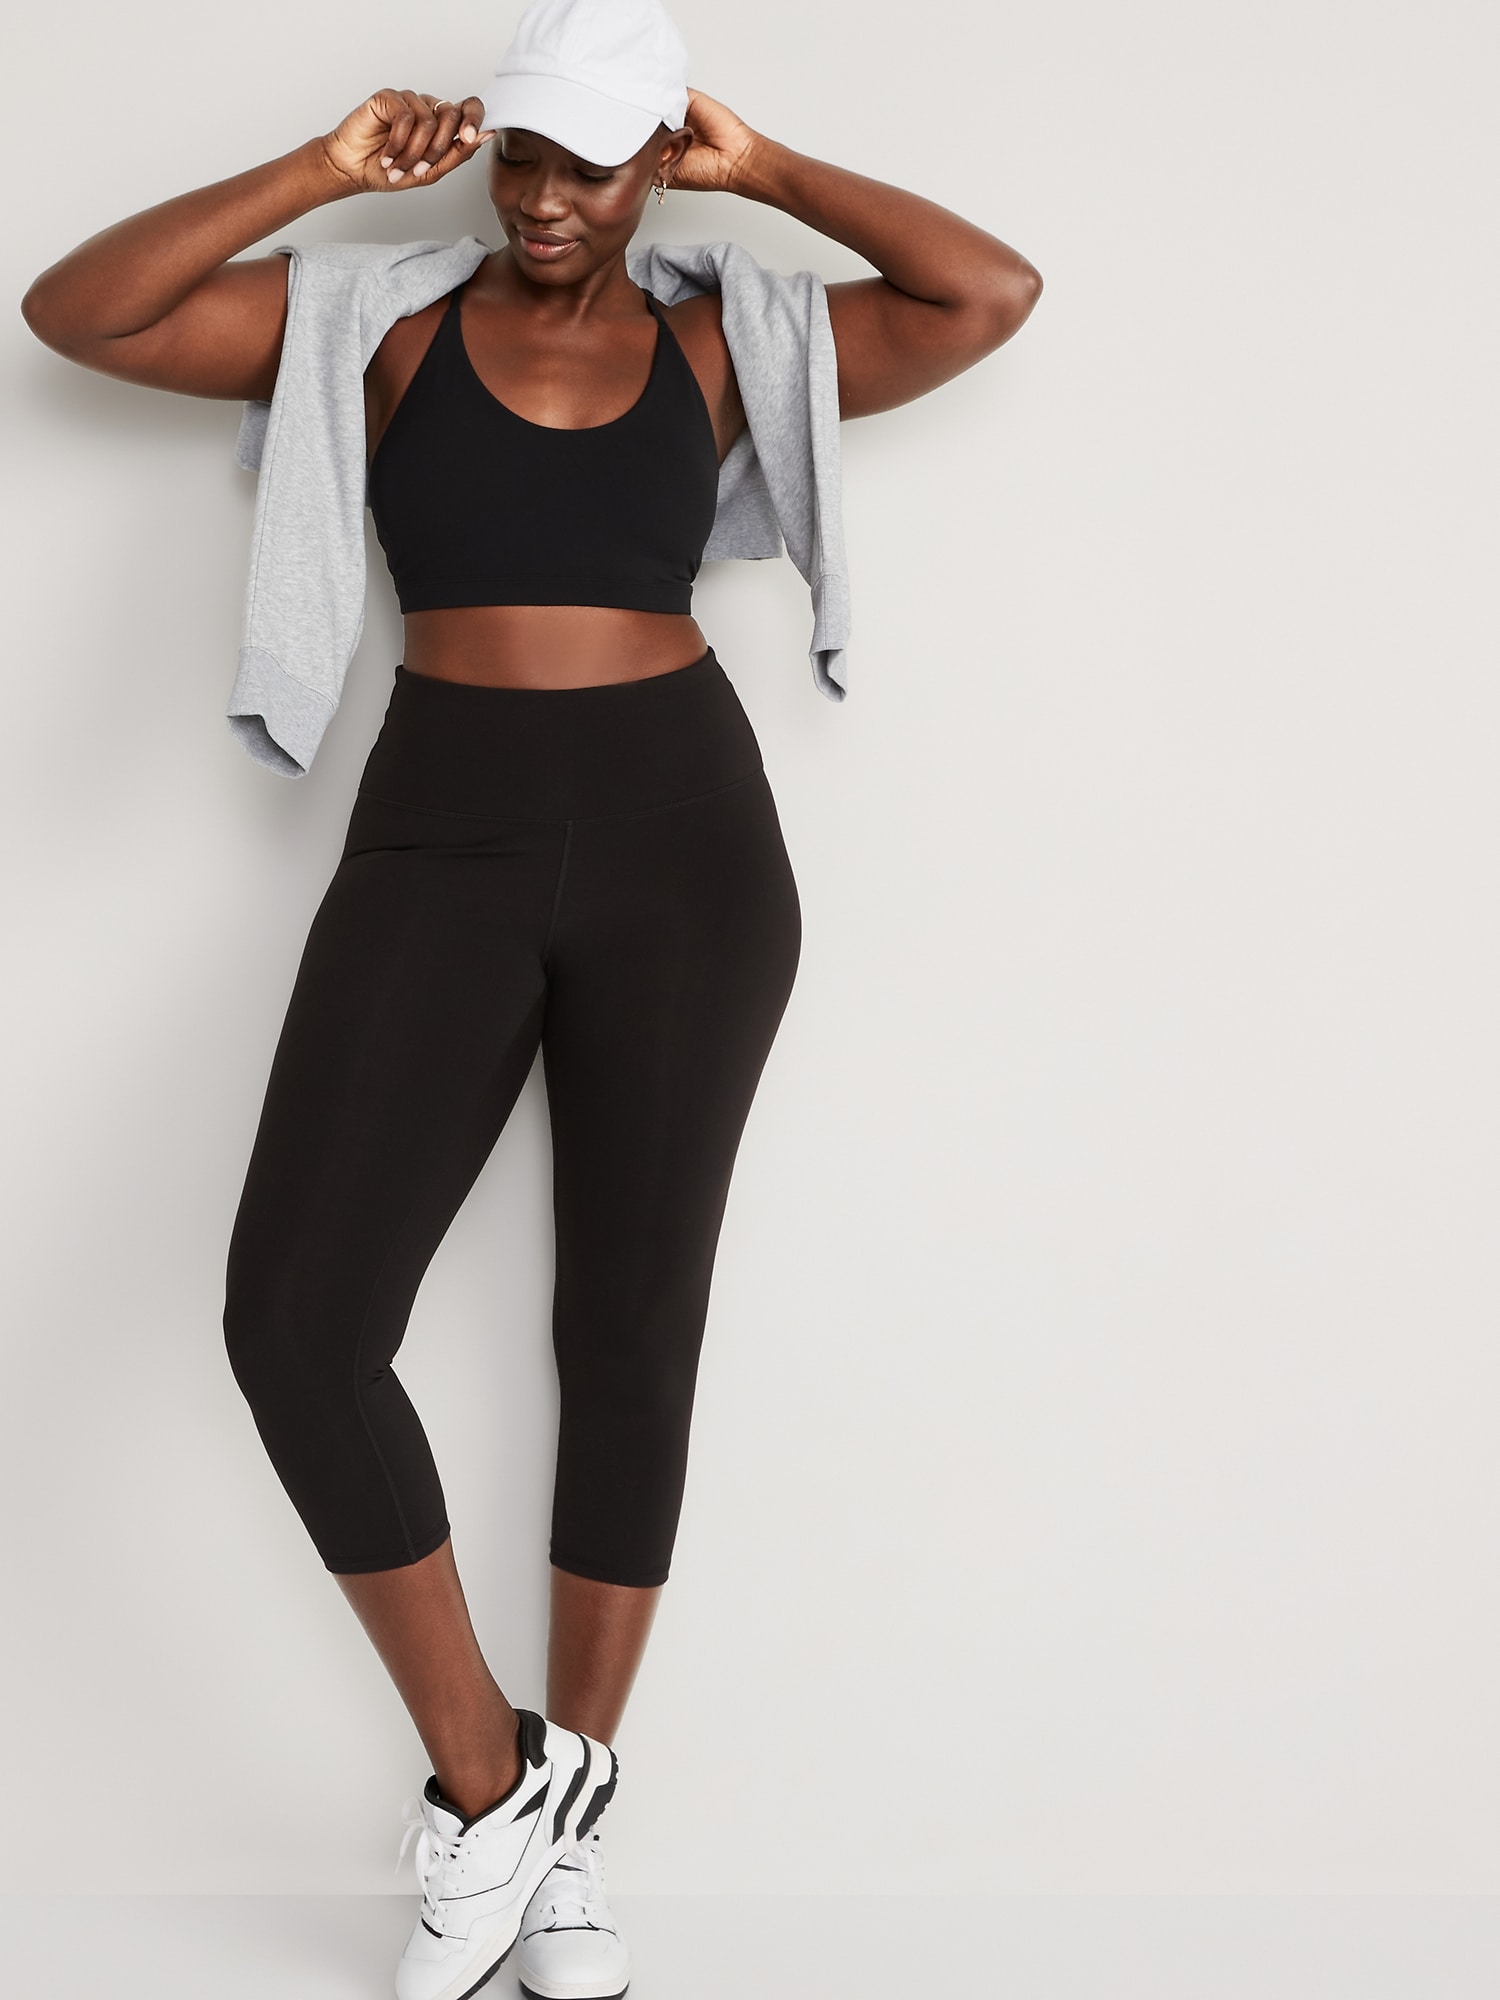 Jordan leggings & crop top set Girls size 13/15yrs | eBay-lmd.edu.vn